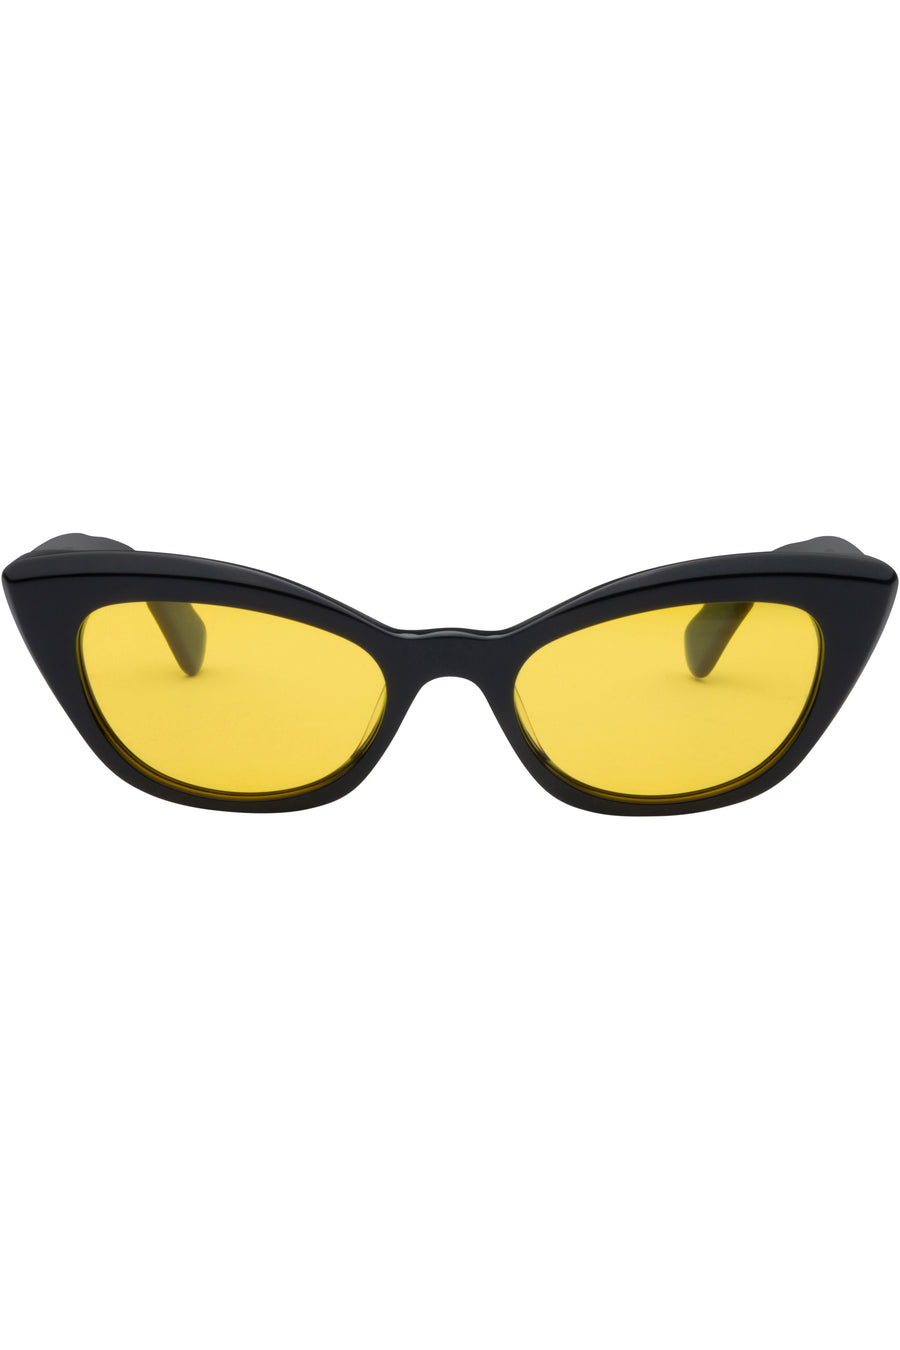 Cat Eye Cool guy Sunglasses Black/Yellow